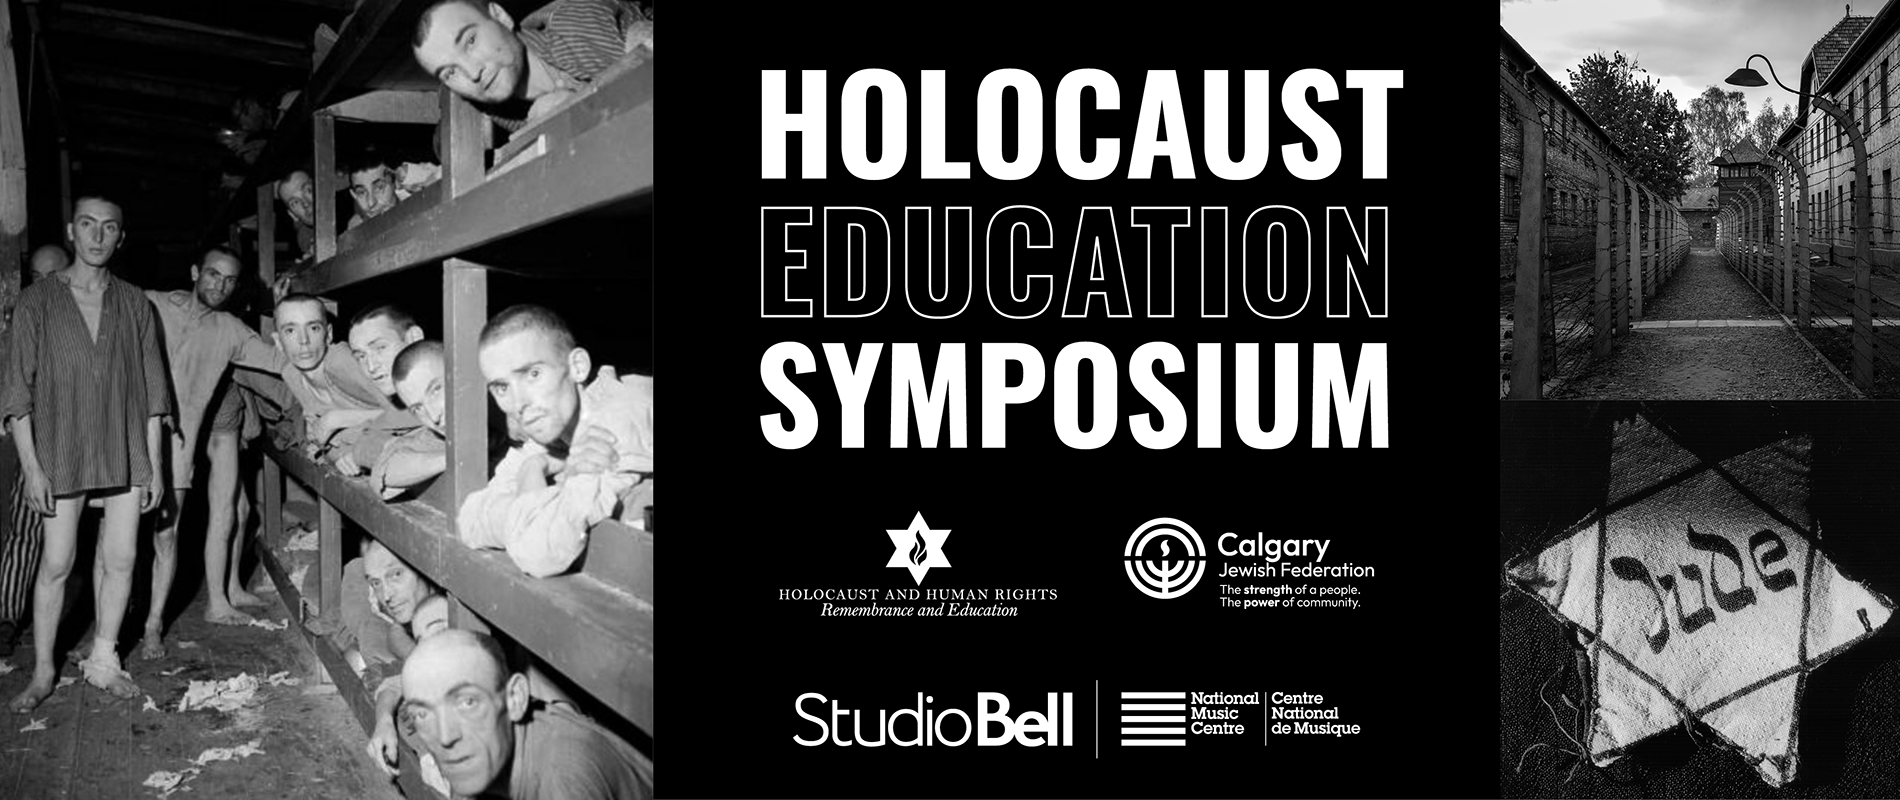 Holocaust Education Symposium